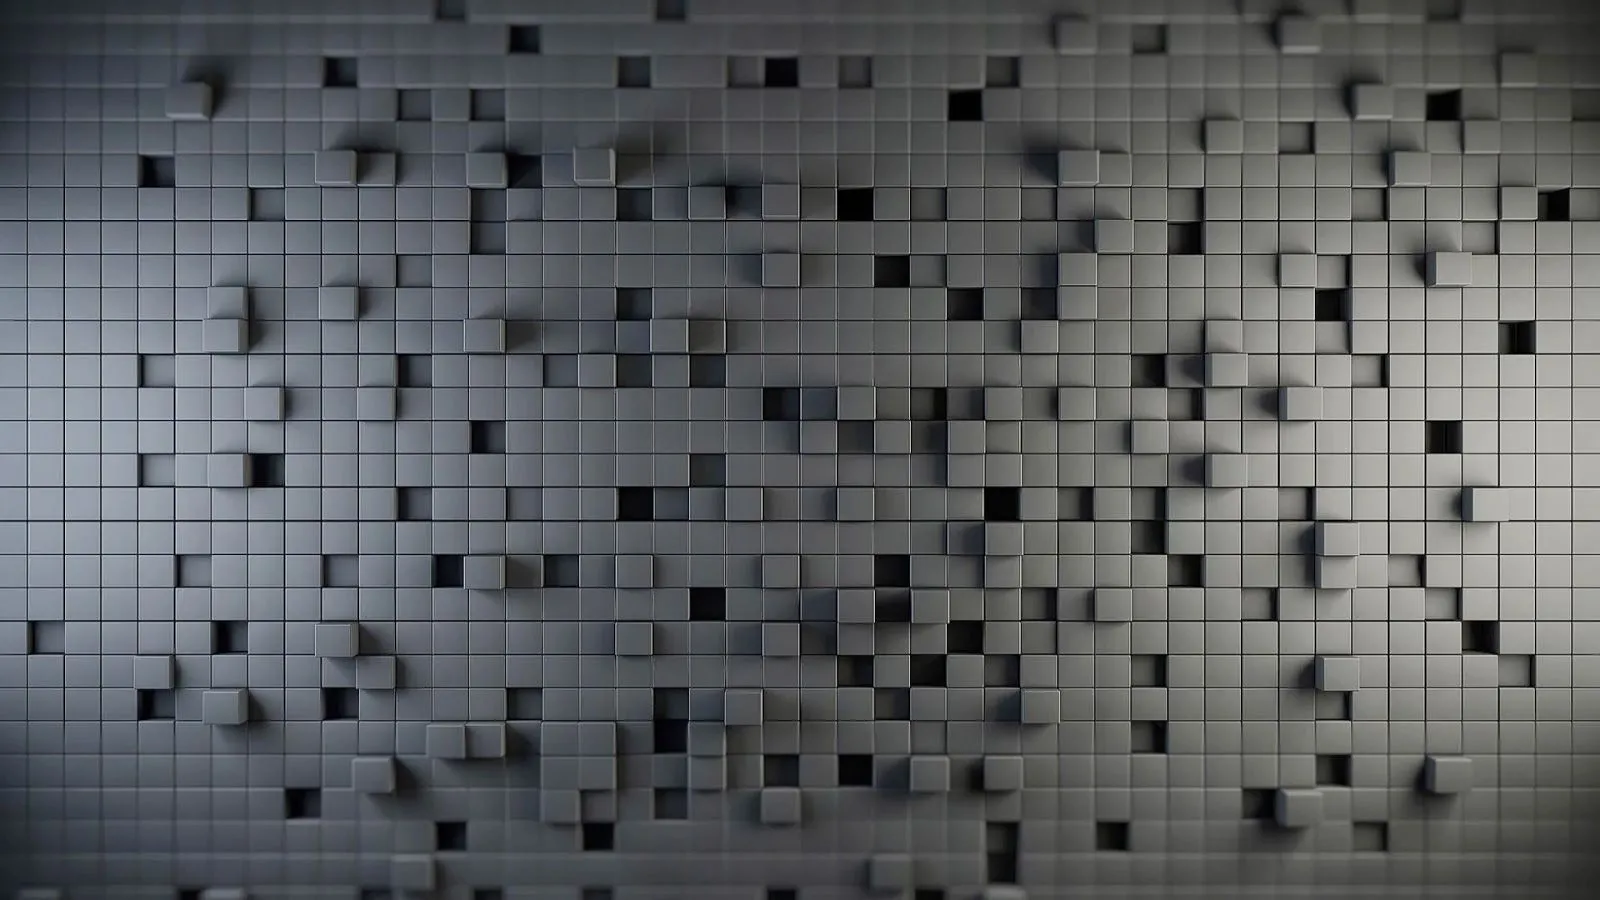 Fondo de Pantalla Abstracto Pared de cubos grises - imagenes ...